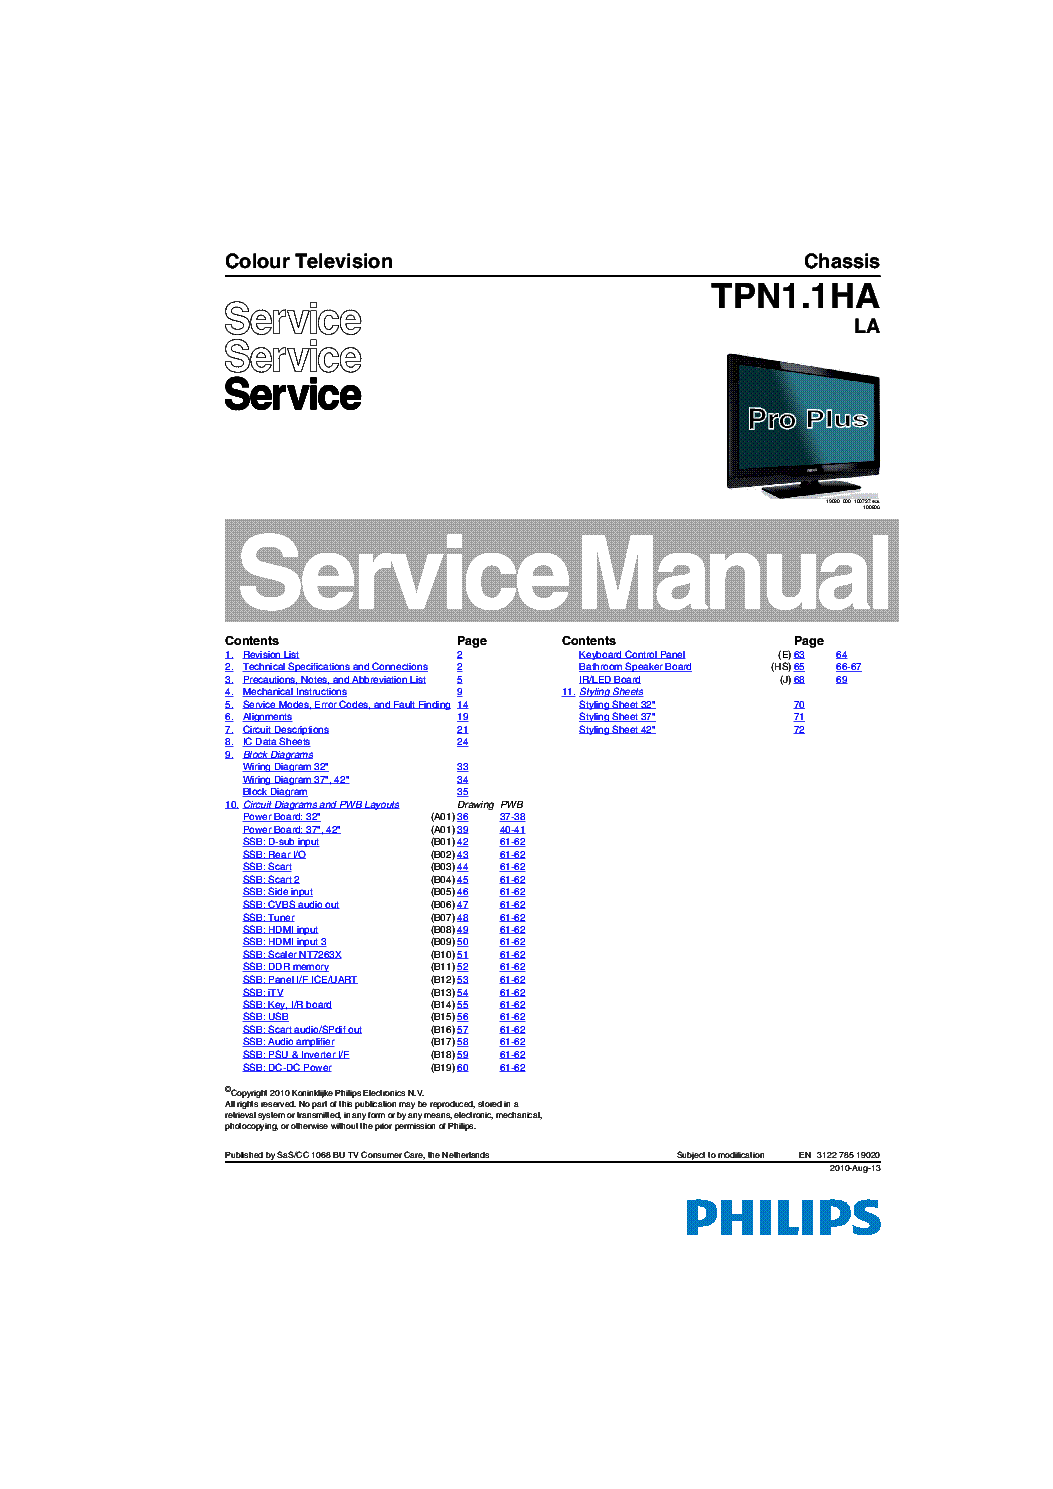 PHILIPS CHASSIS TPN1.1HA LA SM service manual (1st page)